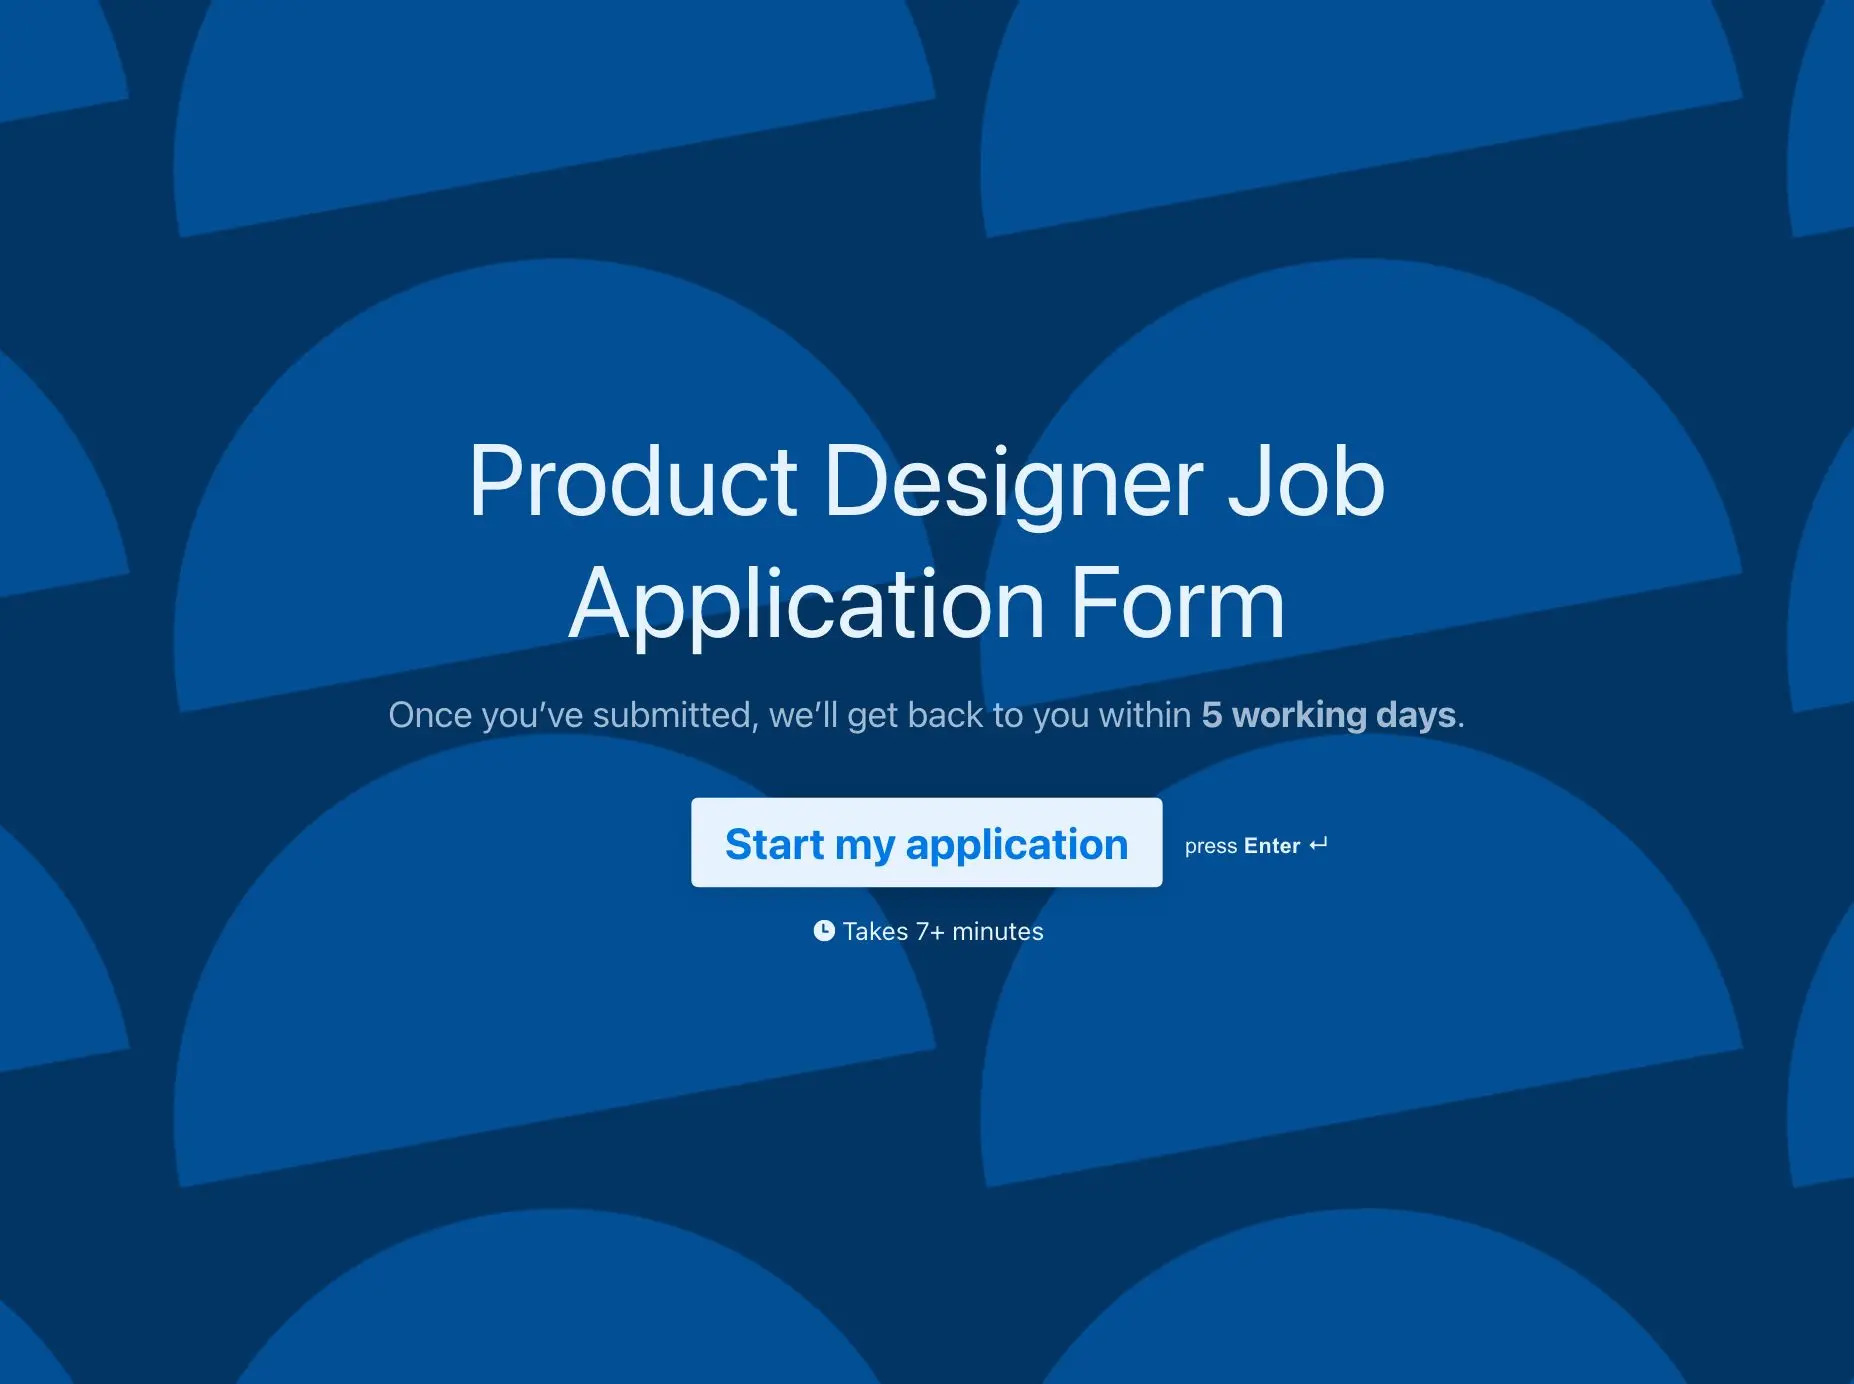 Product Designer Job Application Form Template Hero